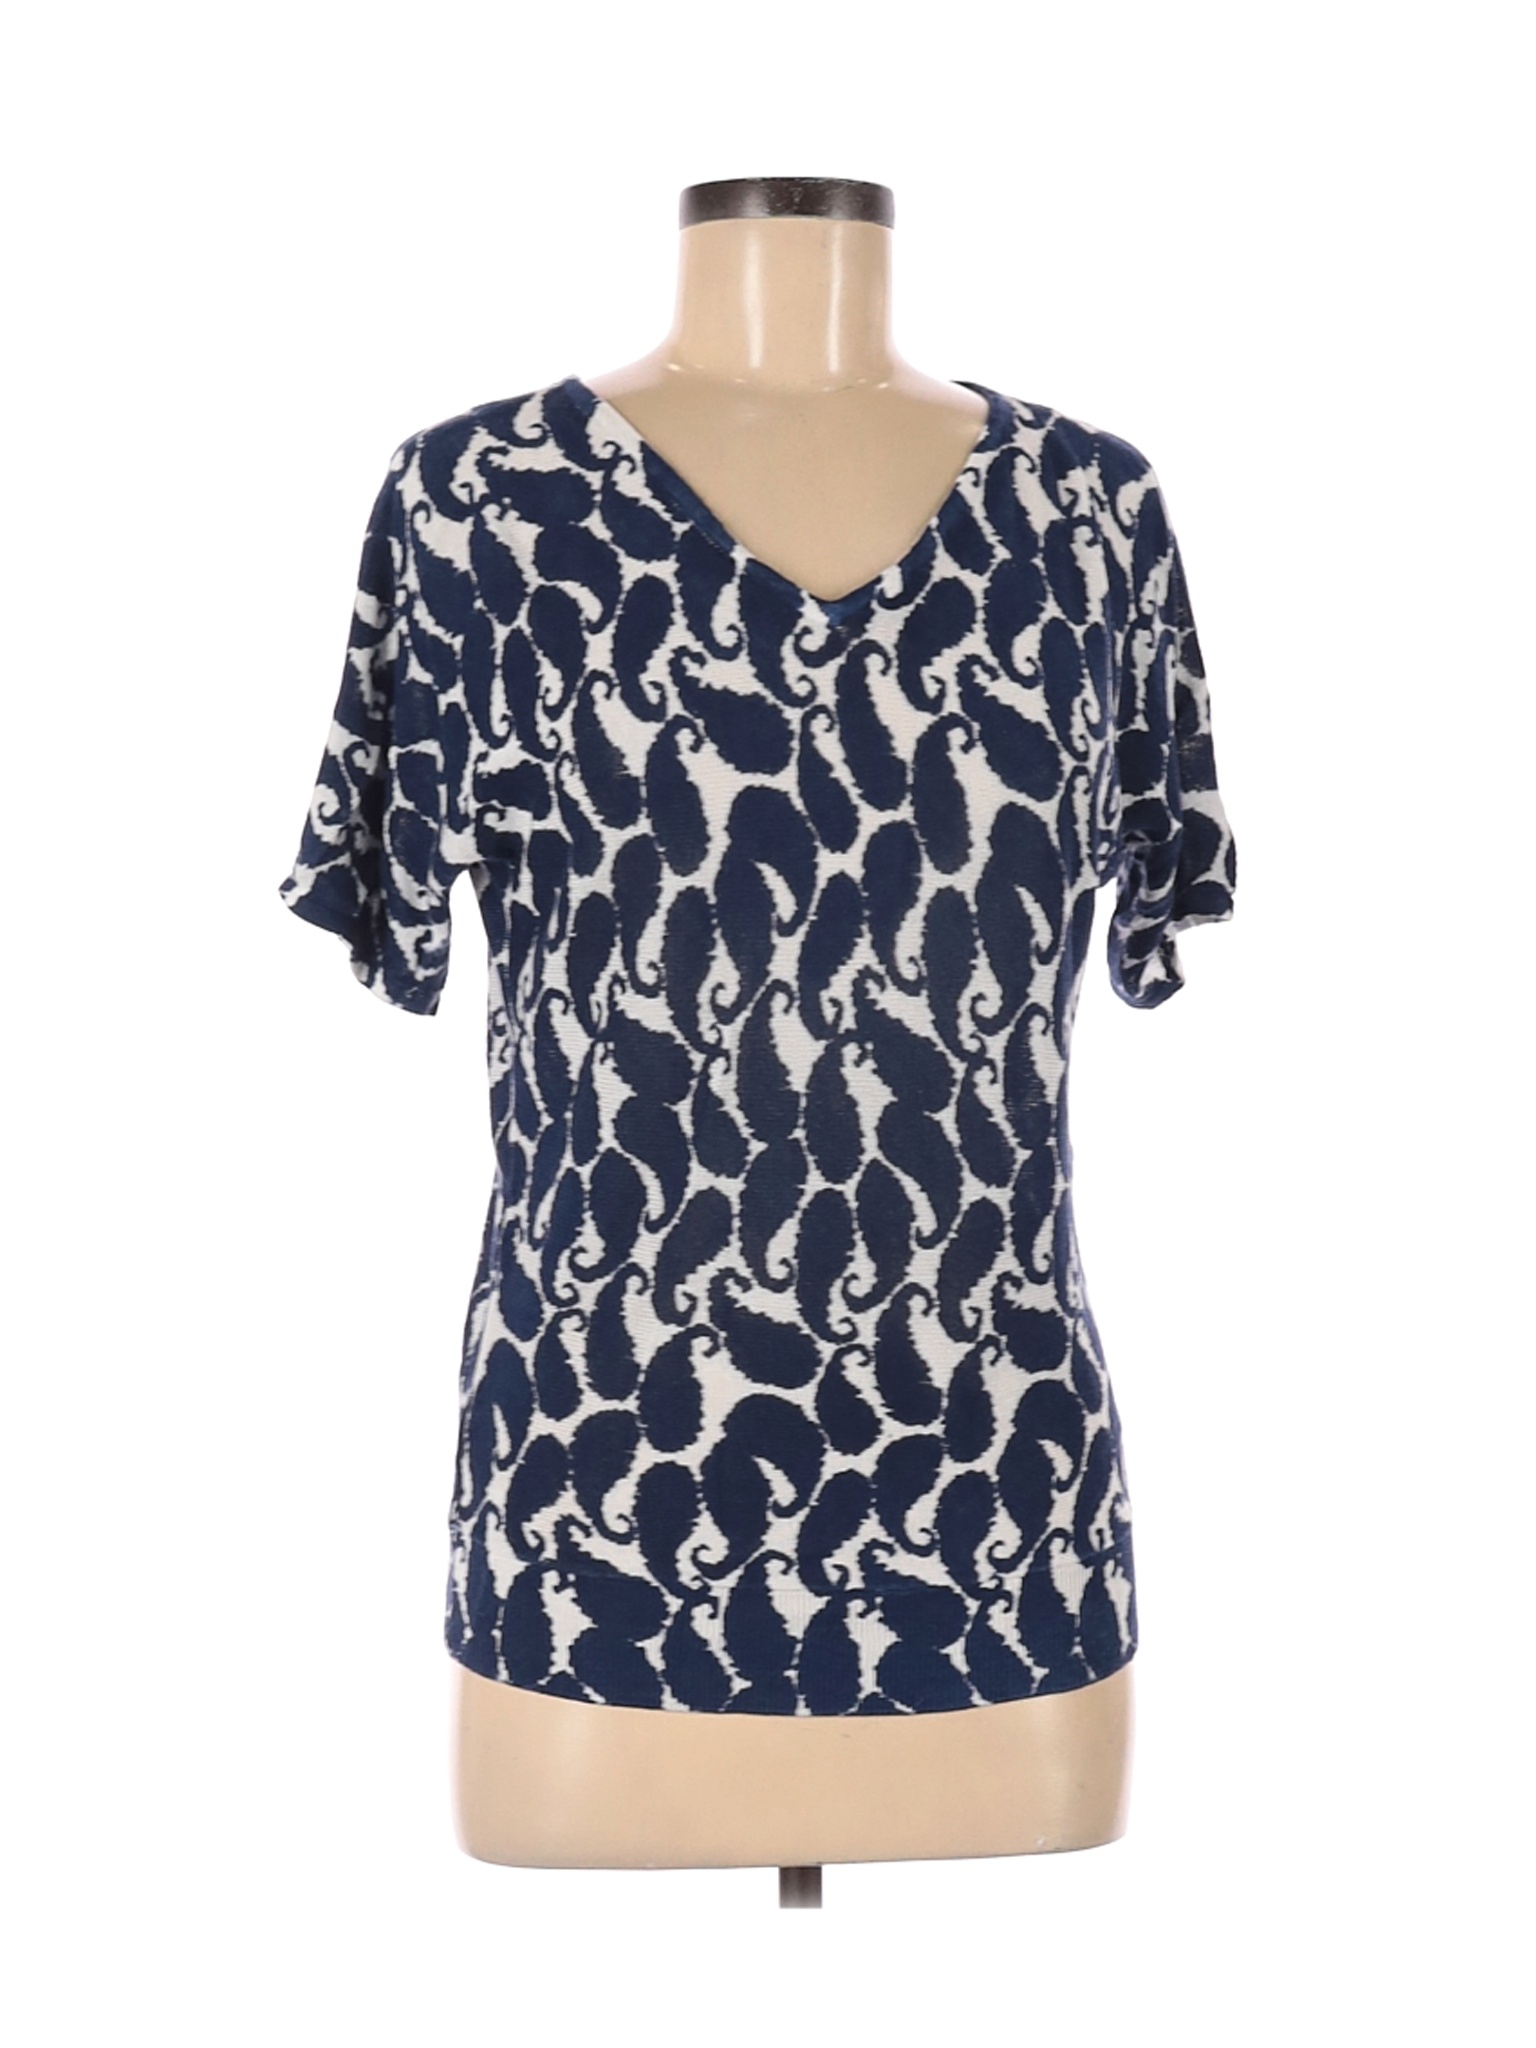 Talbots Women Blue Short Sleeve T-Shirt M Petites | eBay